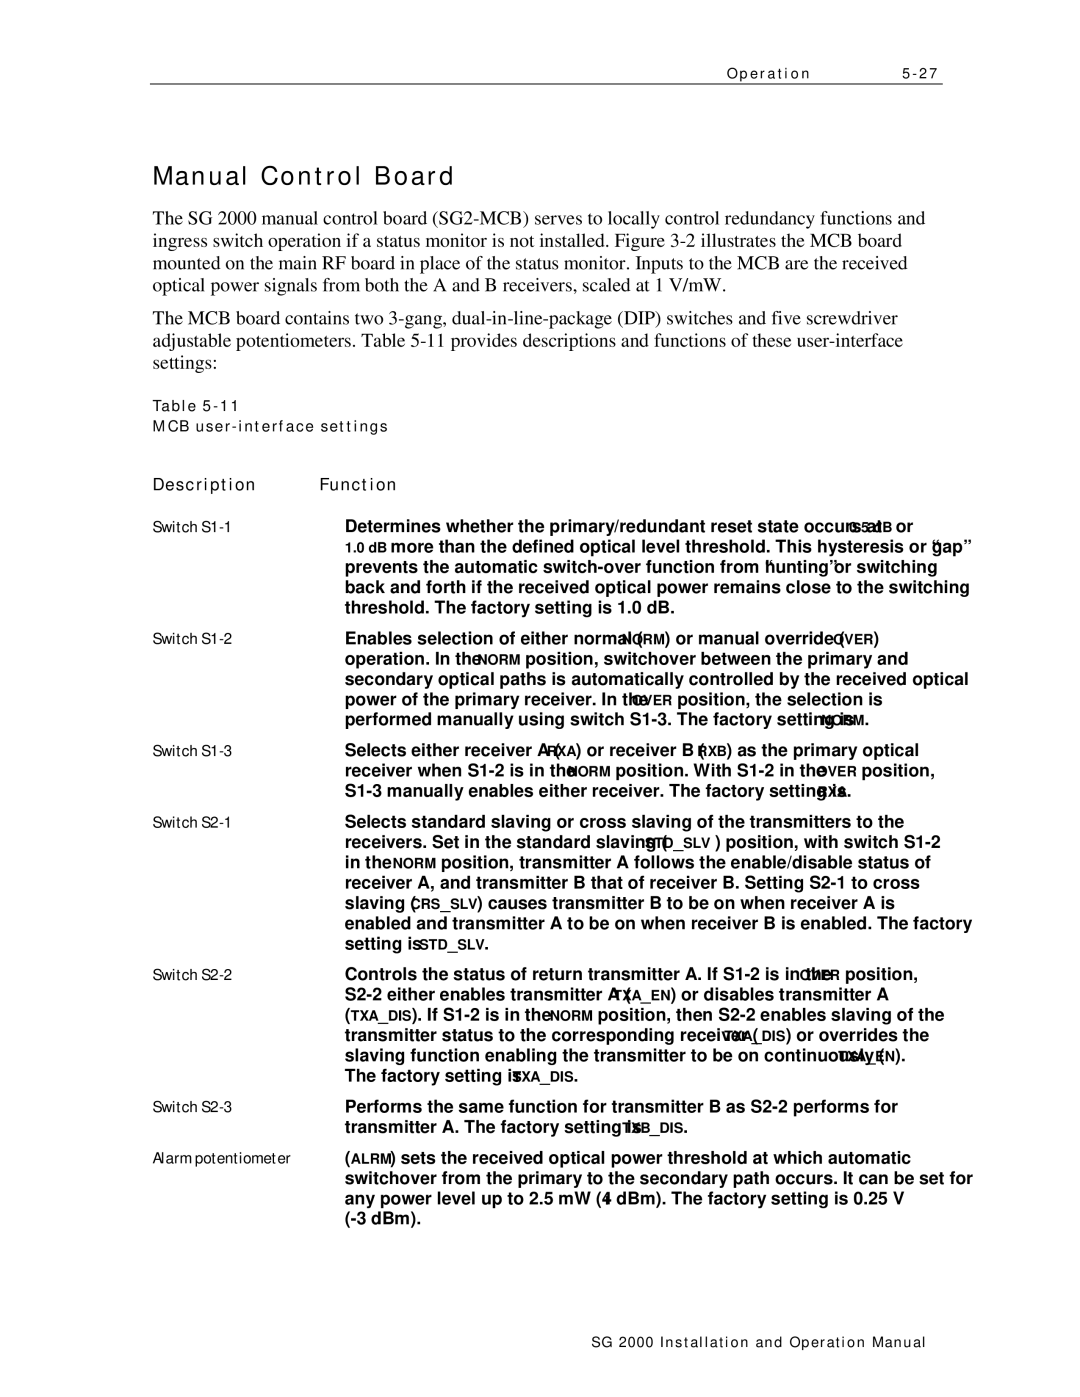 Motorola SG 2000 operation manual Manual Control Board, Description Function 